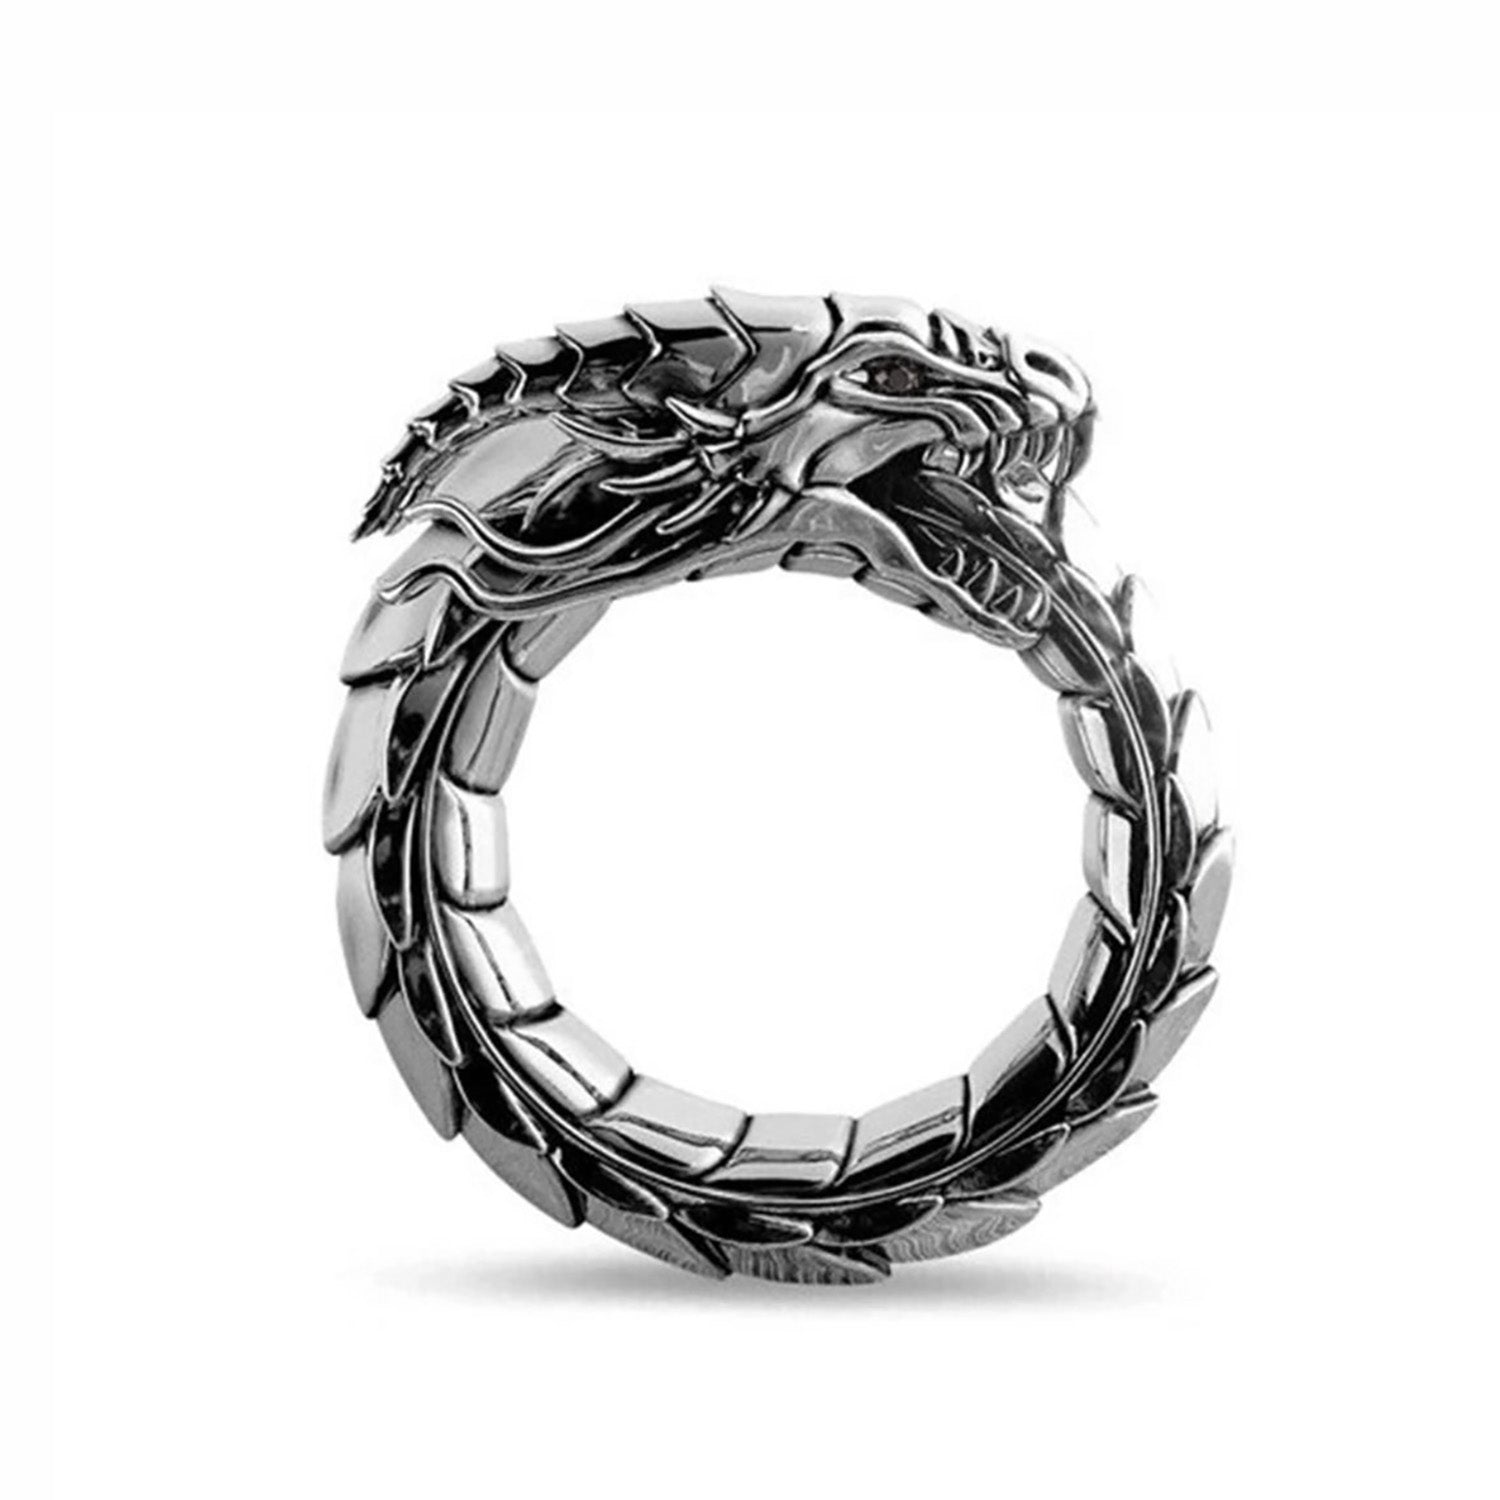 Dragon Ring for Men or Women  Stainless Steel Gothic Biker Punk Ginger Lyne Collection - 10